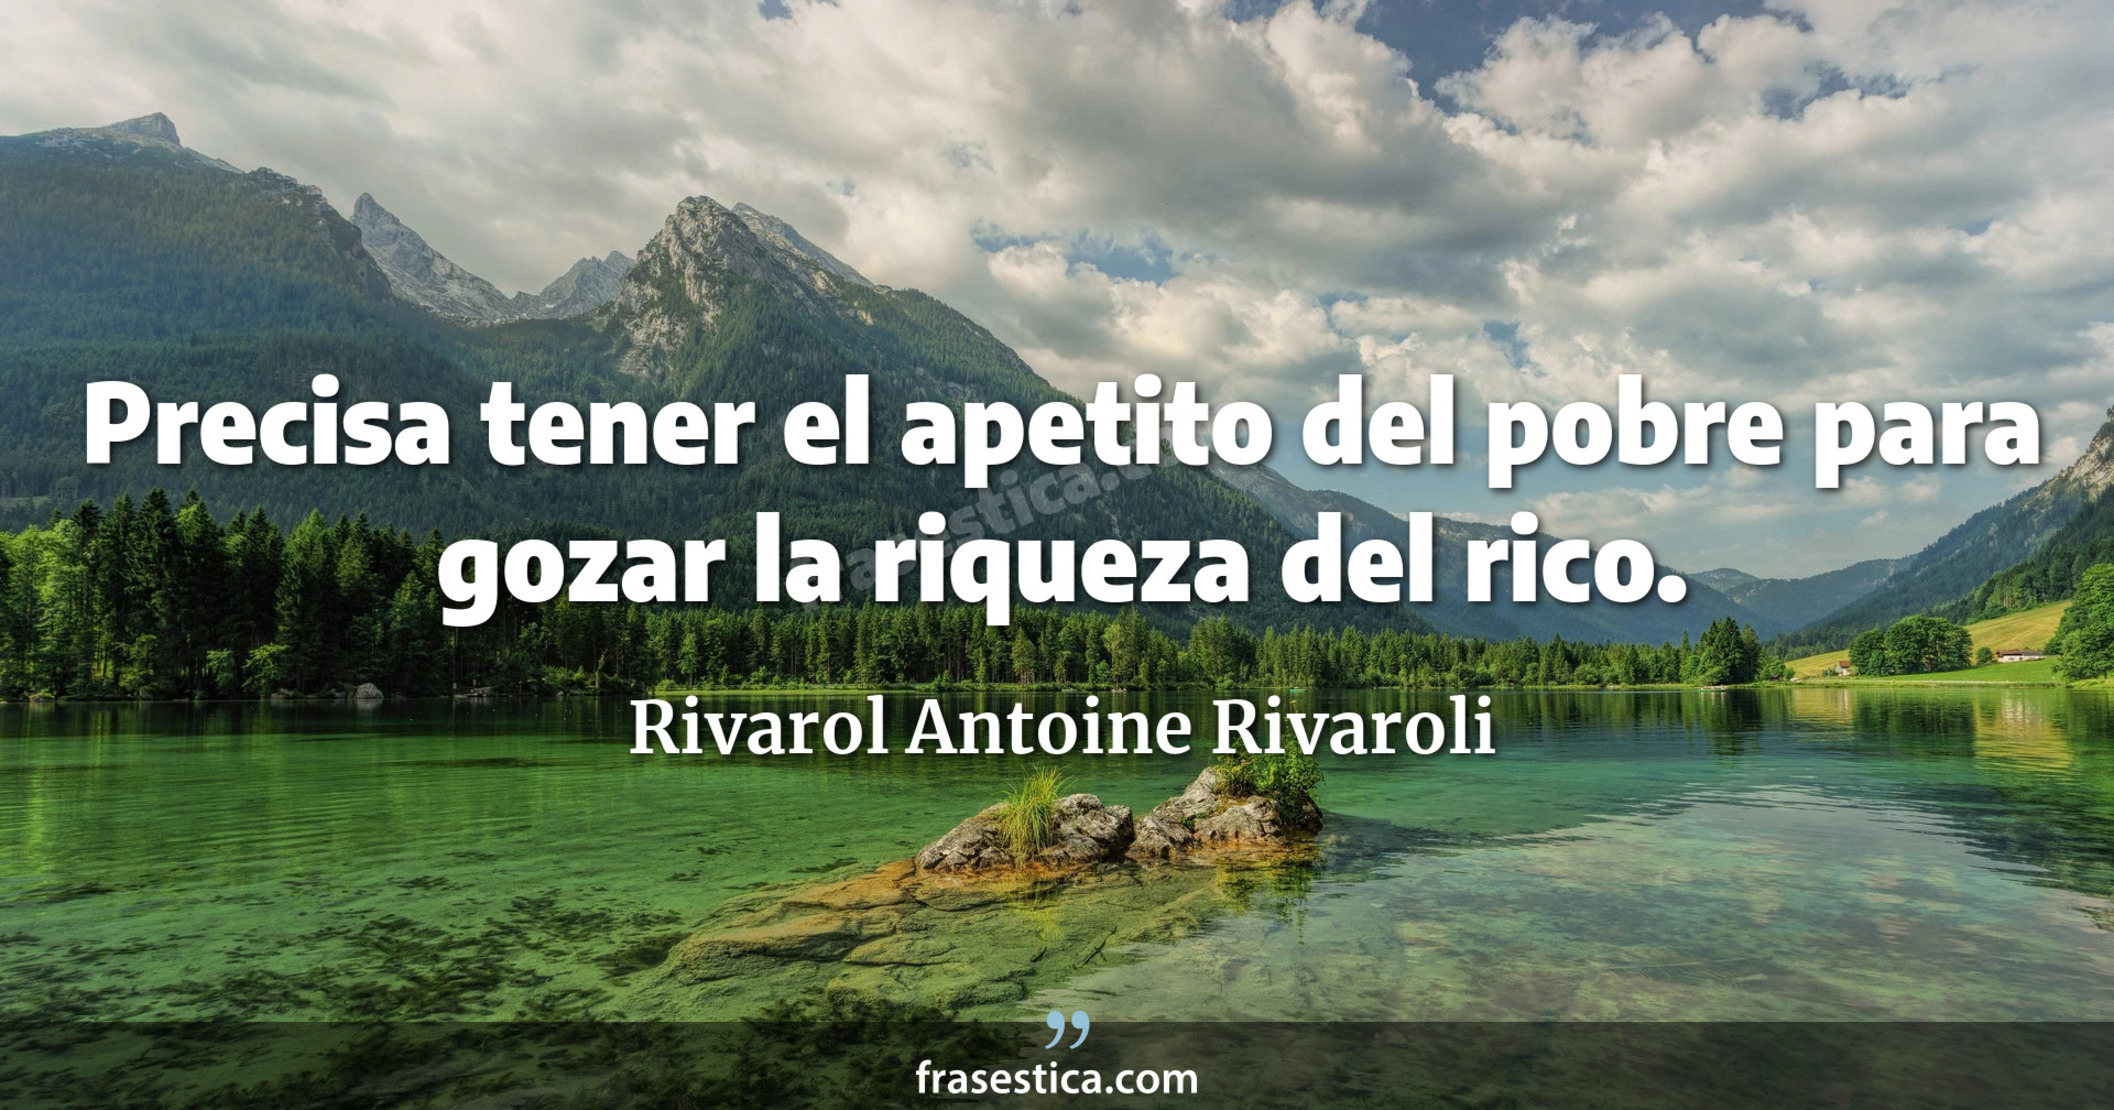 Precisa tener el apetito del pobre para gozar la riqueza del rico. - Rivarol Antoine Rivaroli